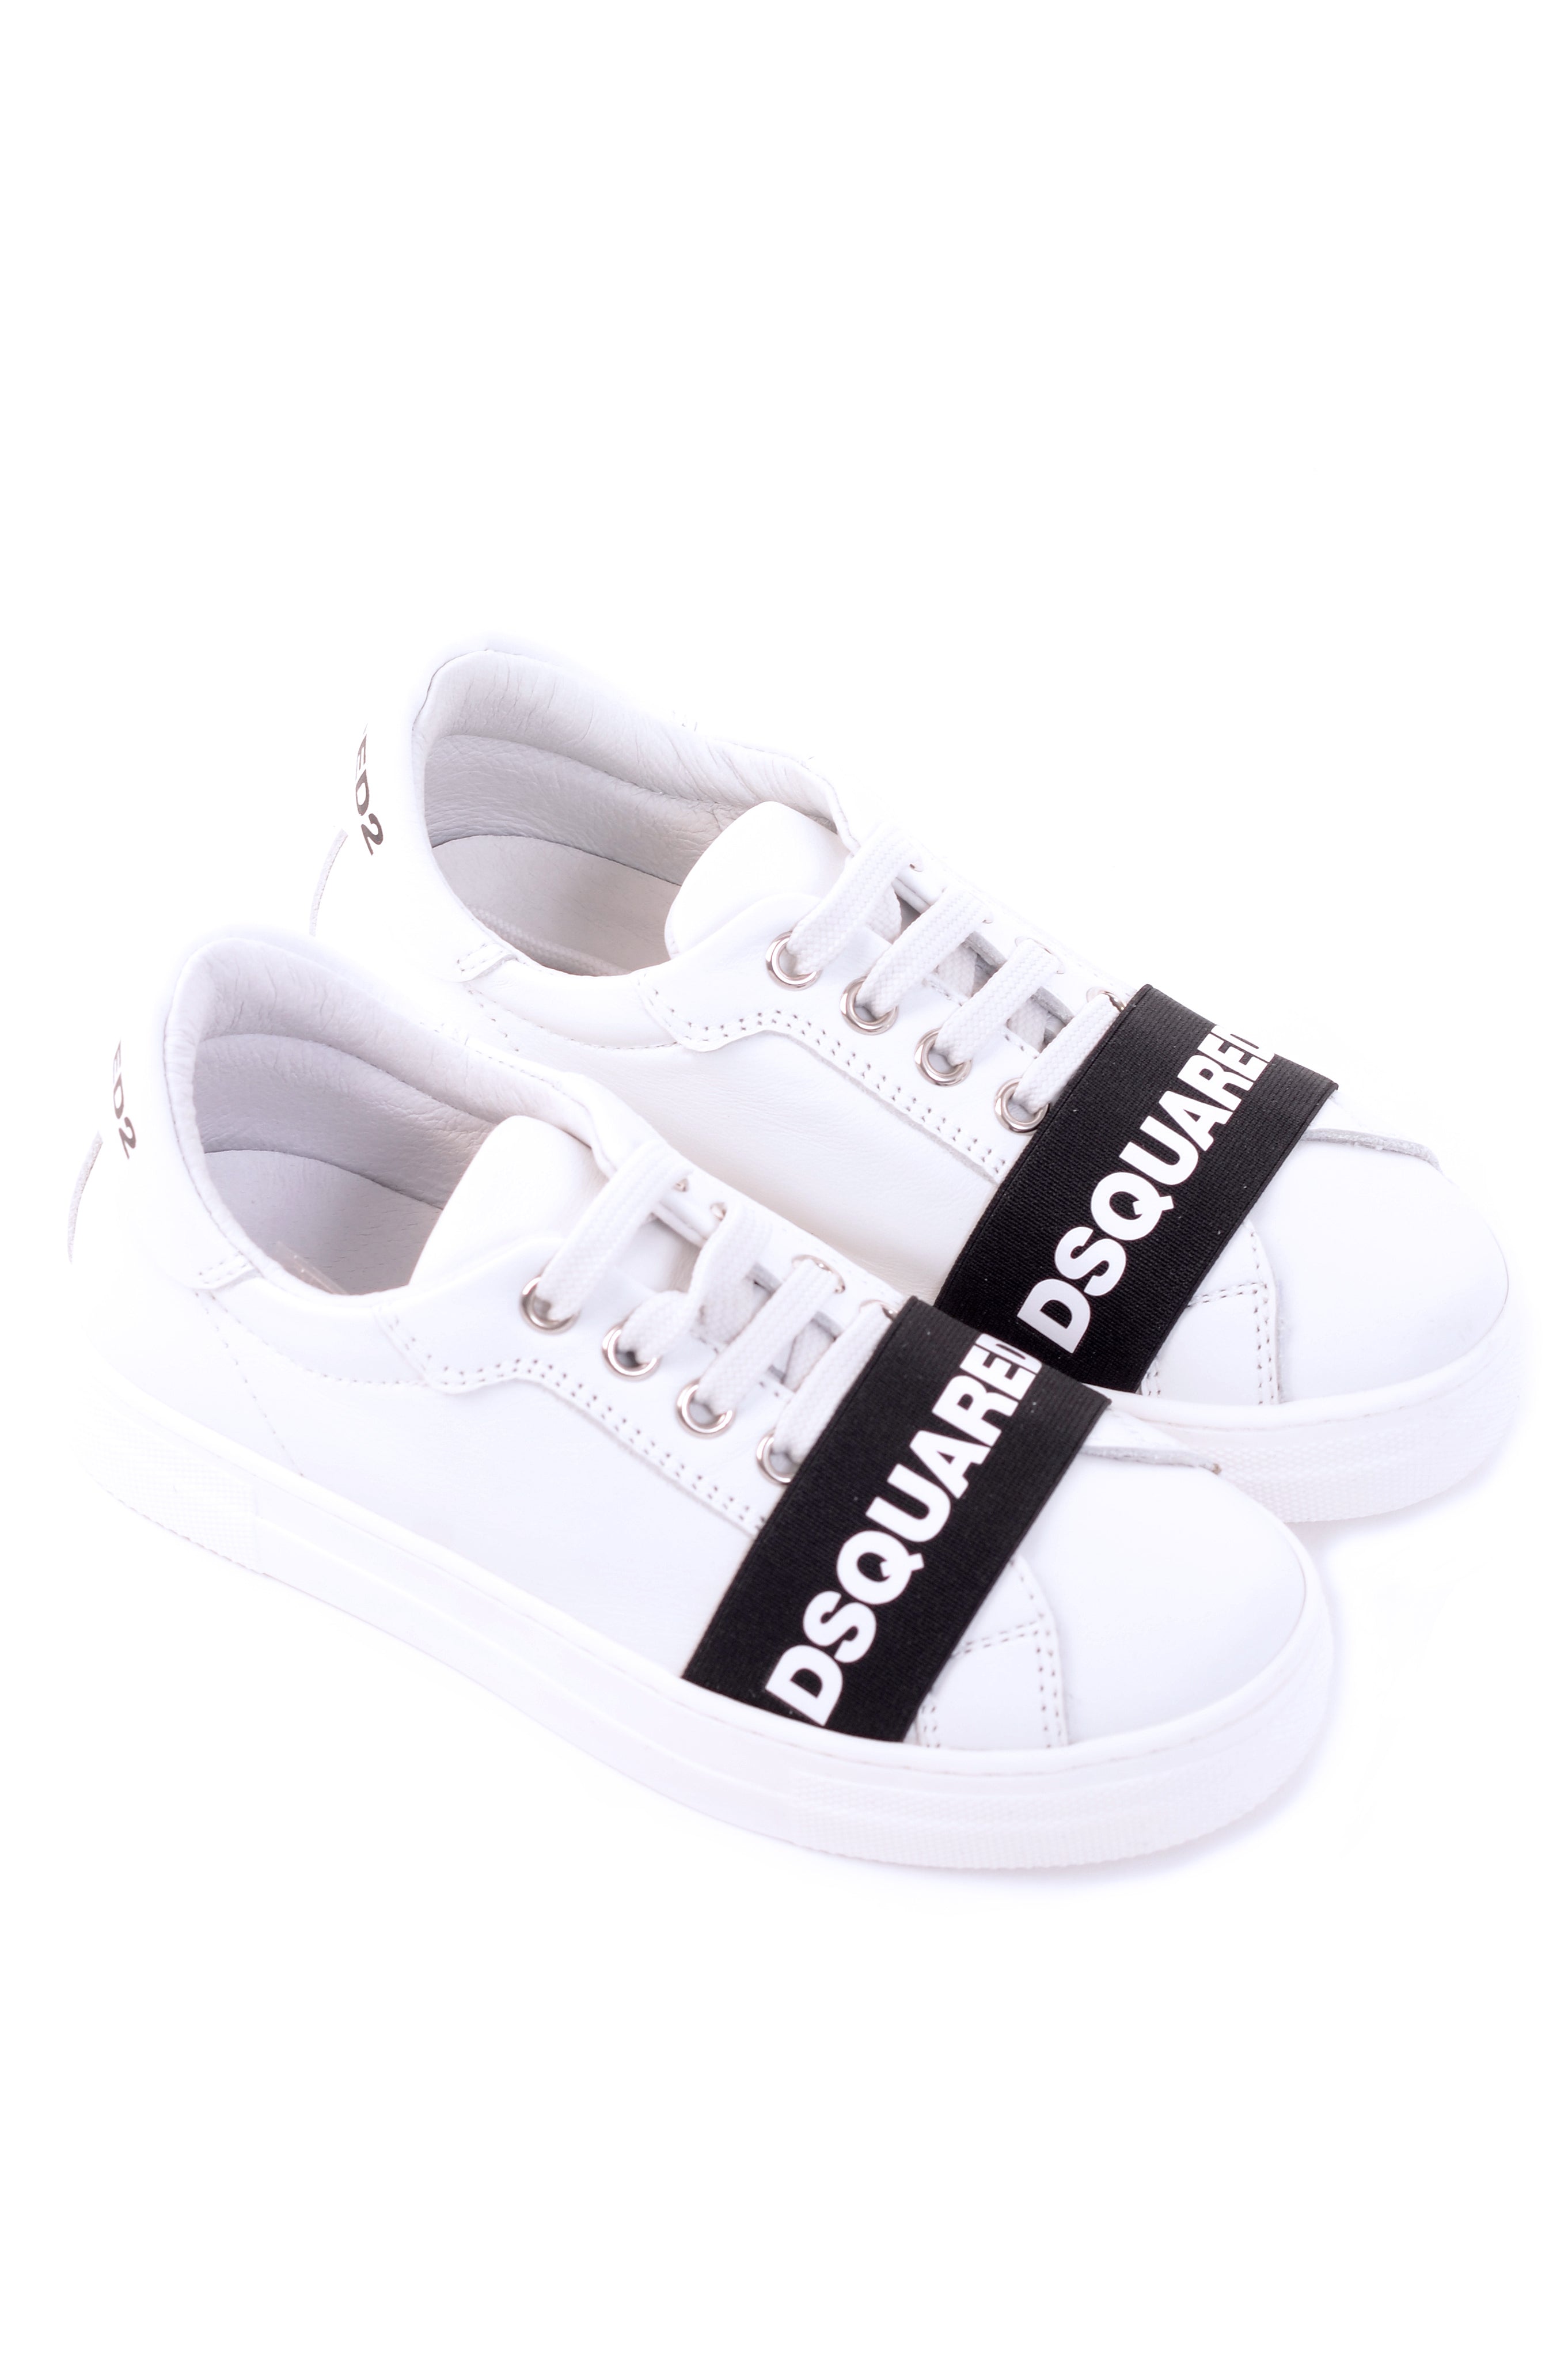 white stylish shoes for boys